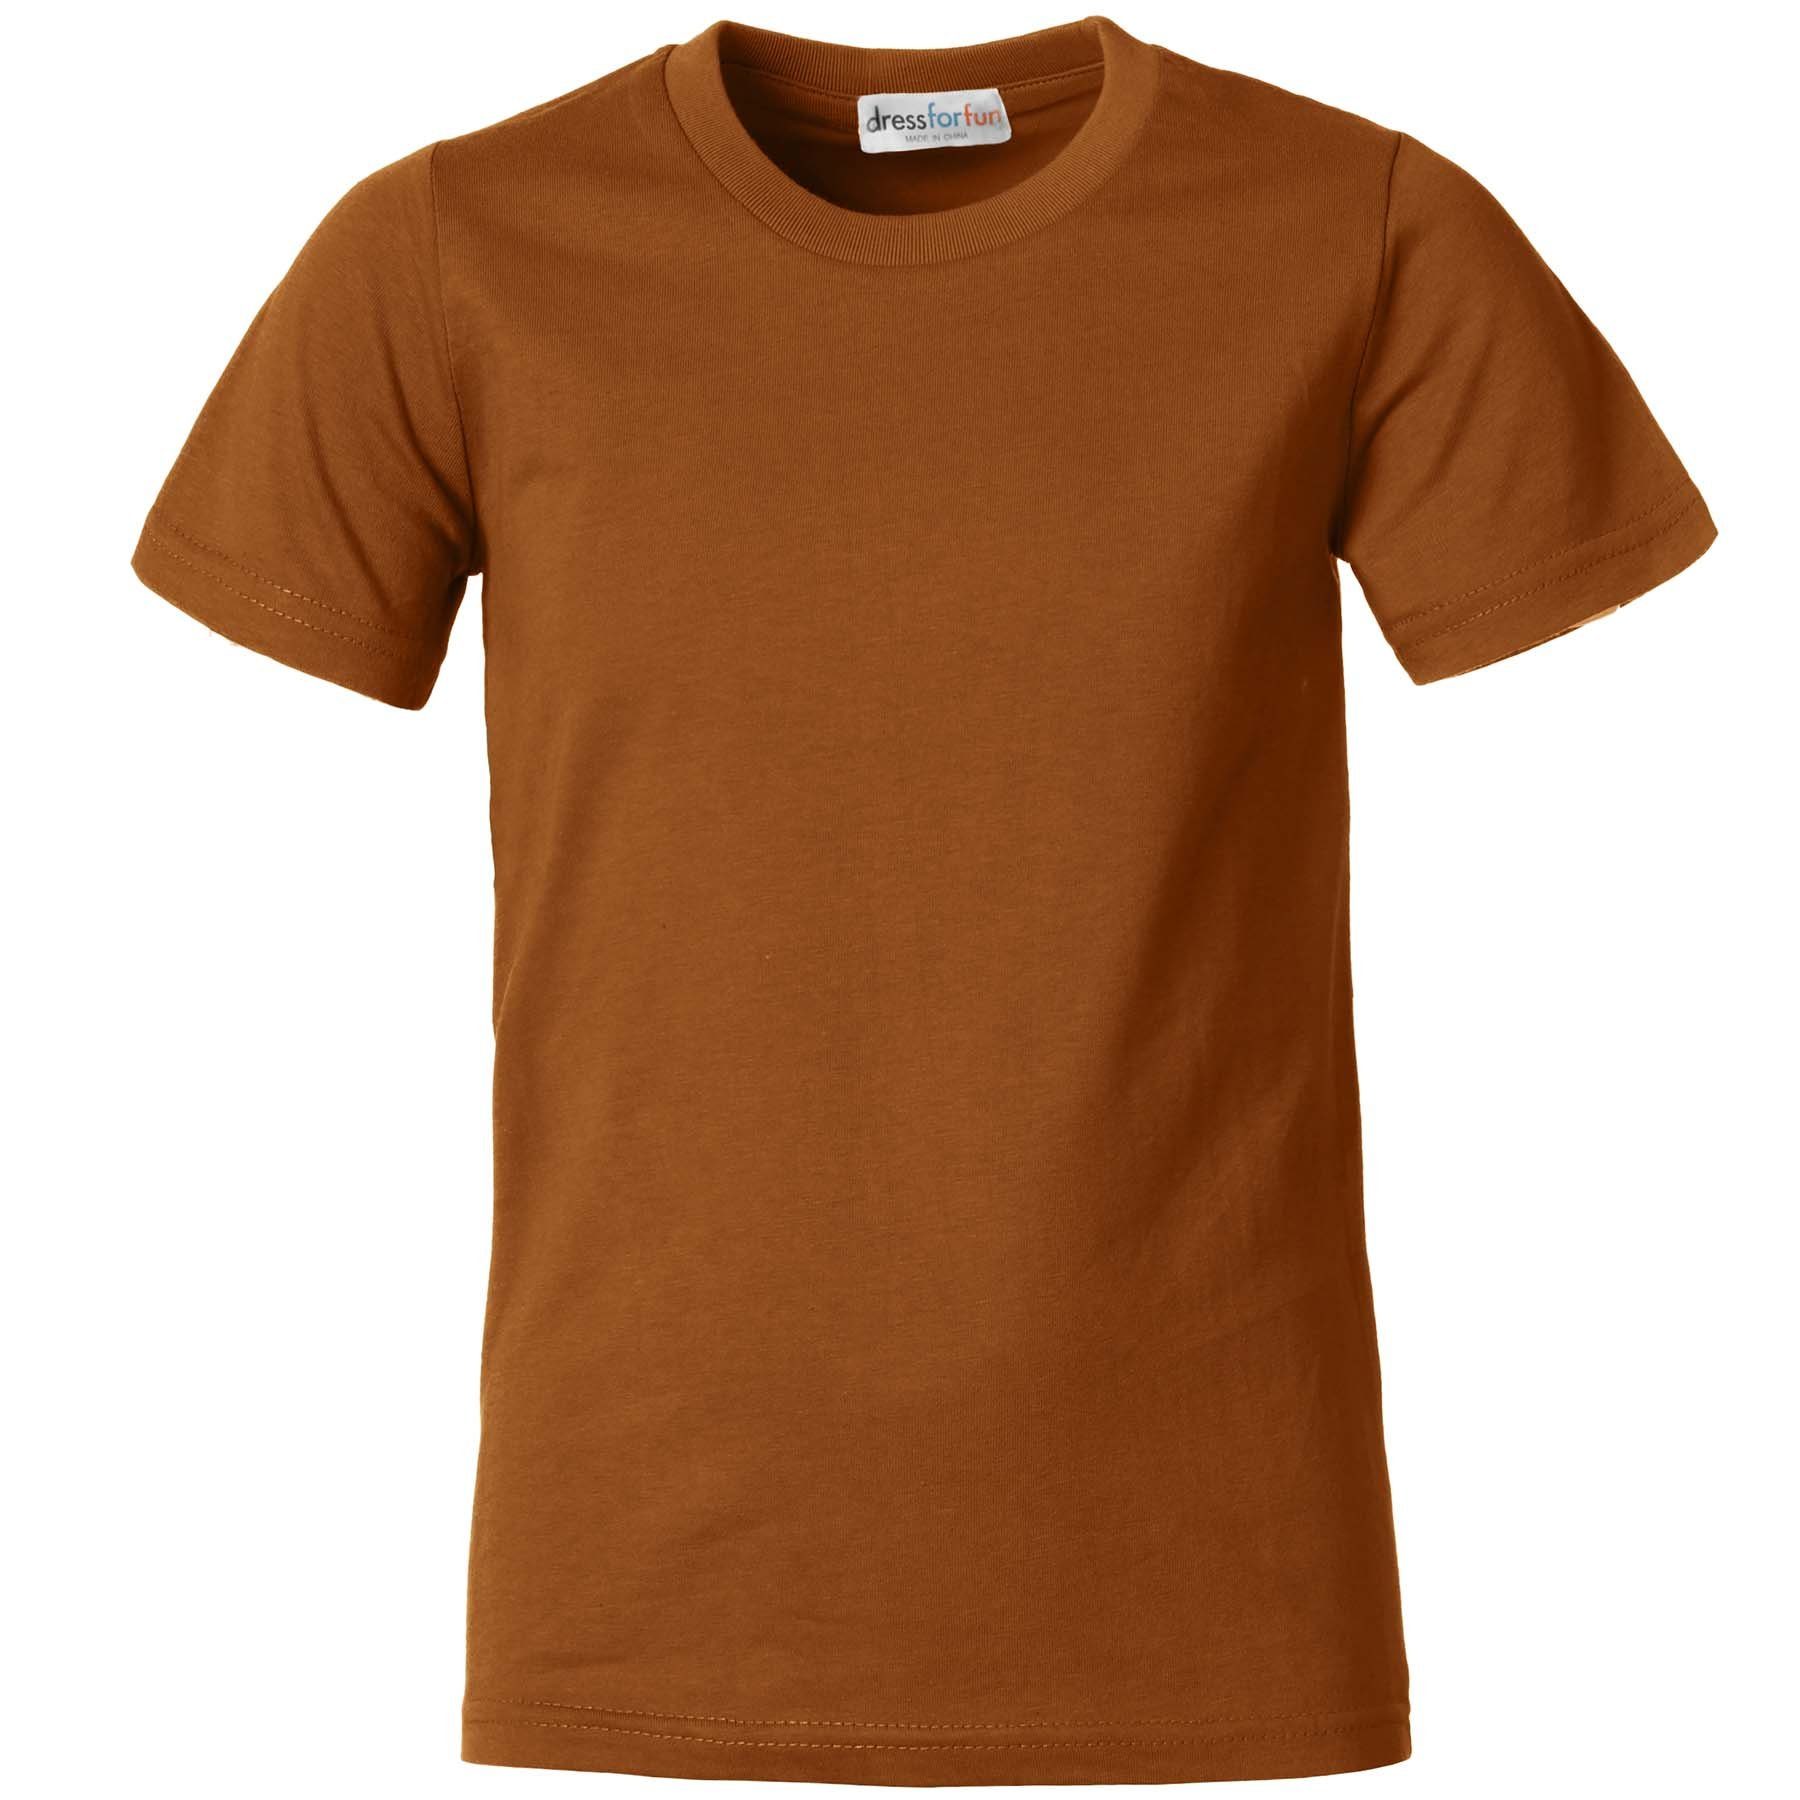 Rundhals Männer T-Shirt braun T-Shirt dressforfun